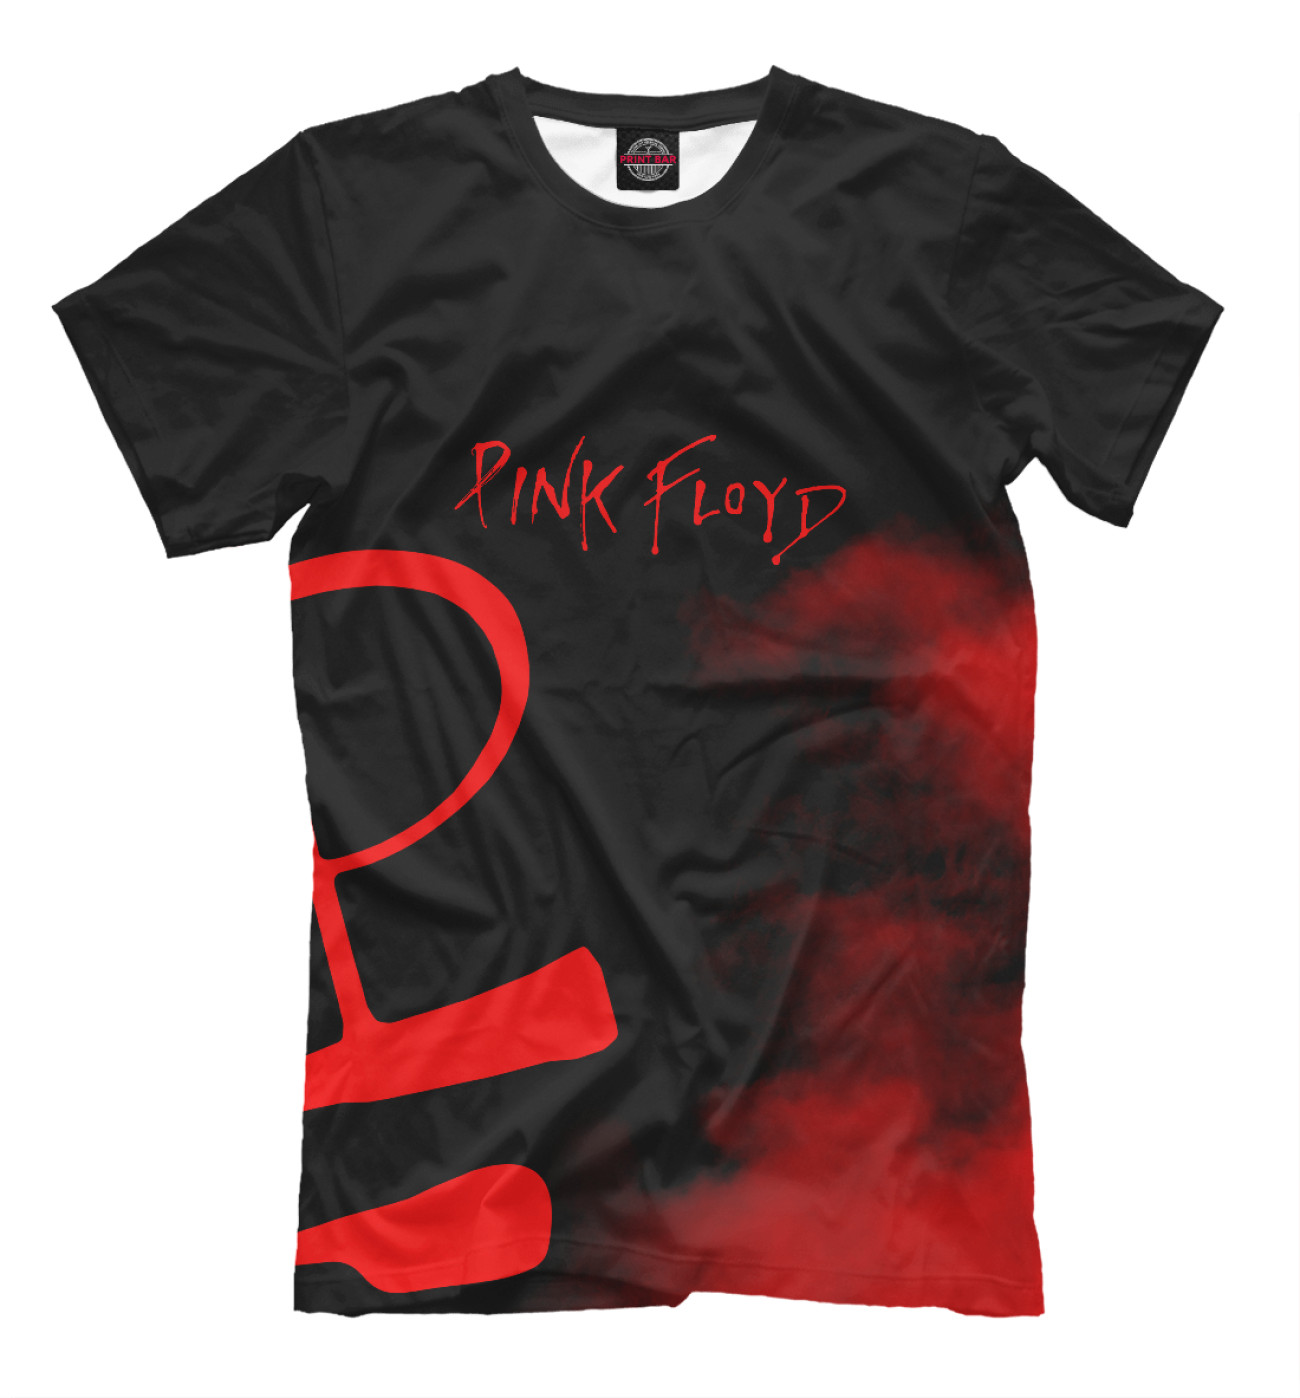 Мужская Футболка Pink Floyd, артикул: PFL-305655-fut-2